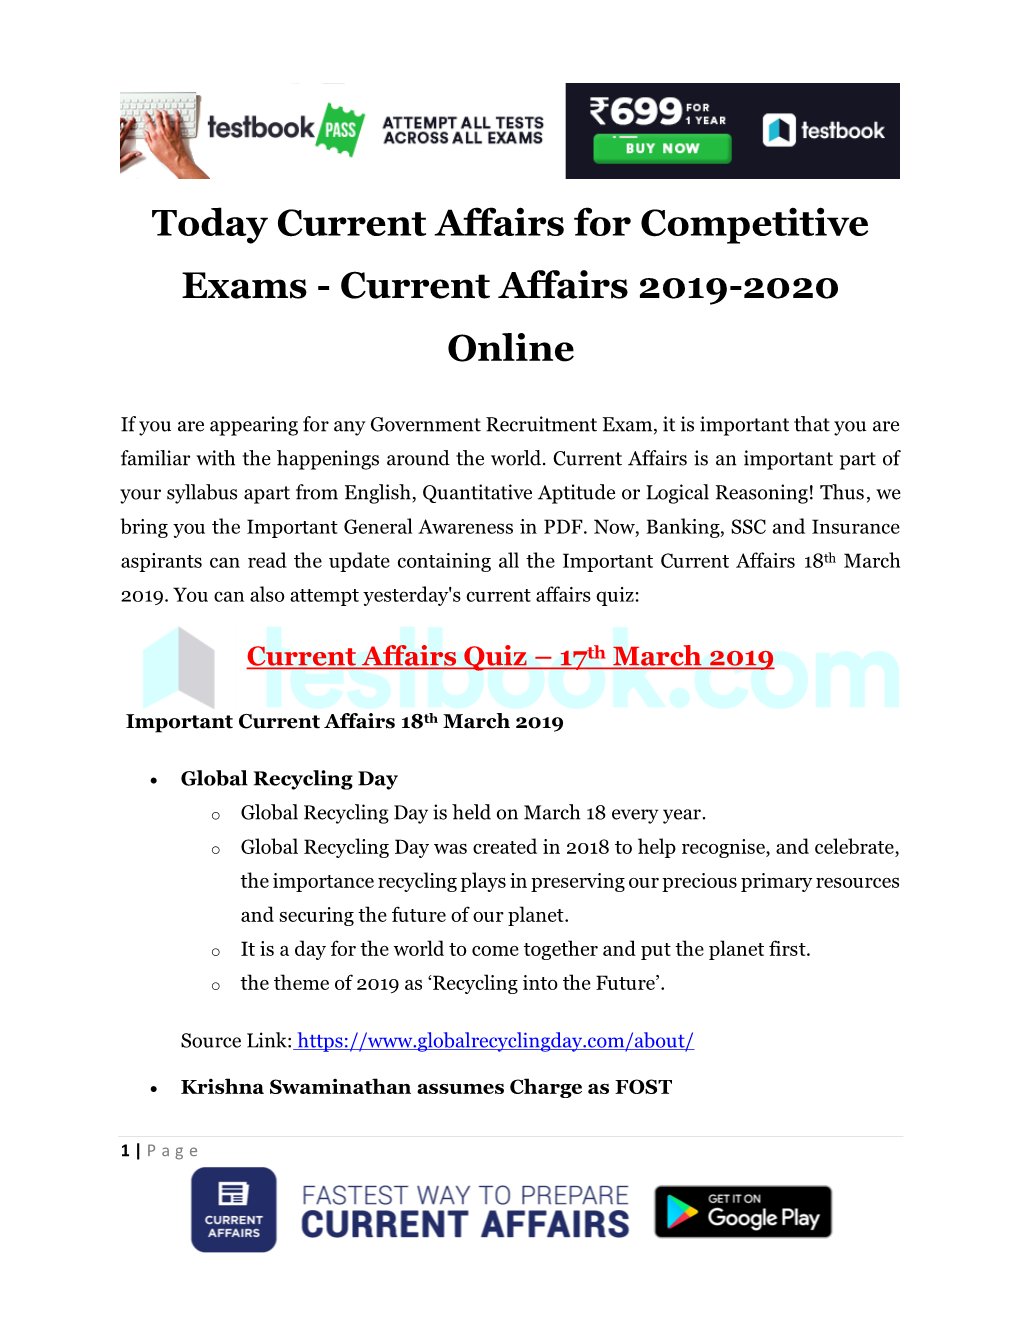 Current Affairs 2019-2020 Online